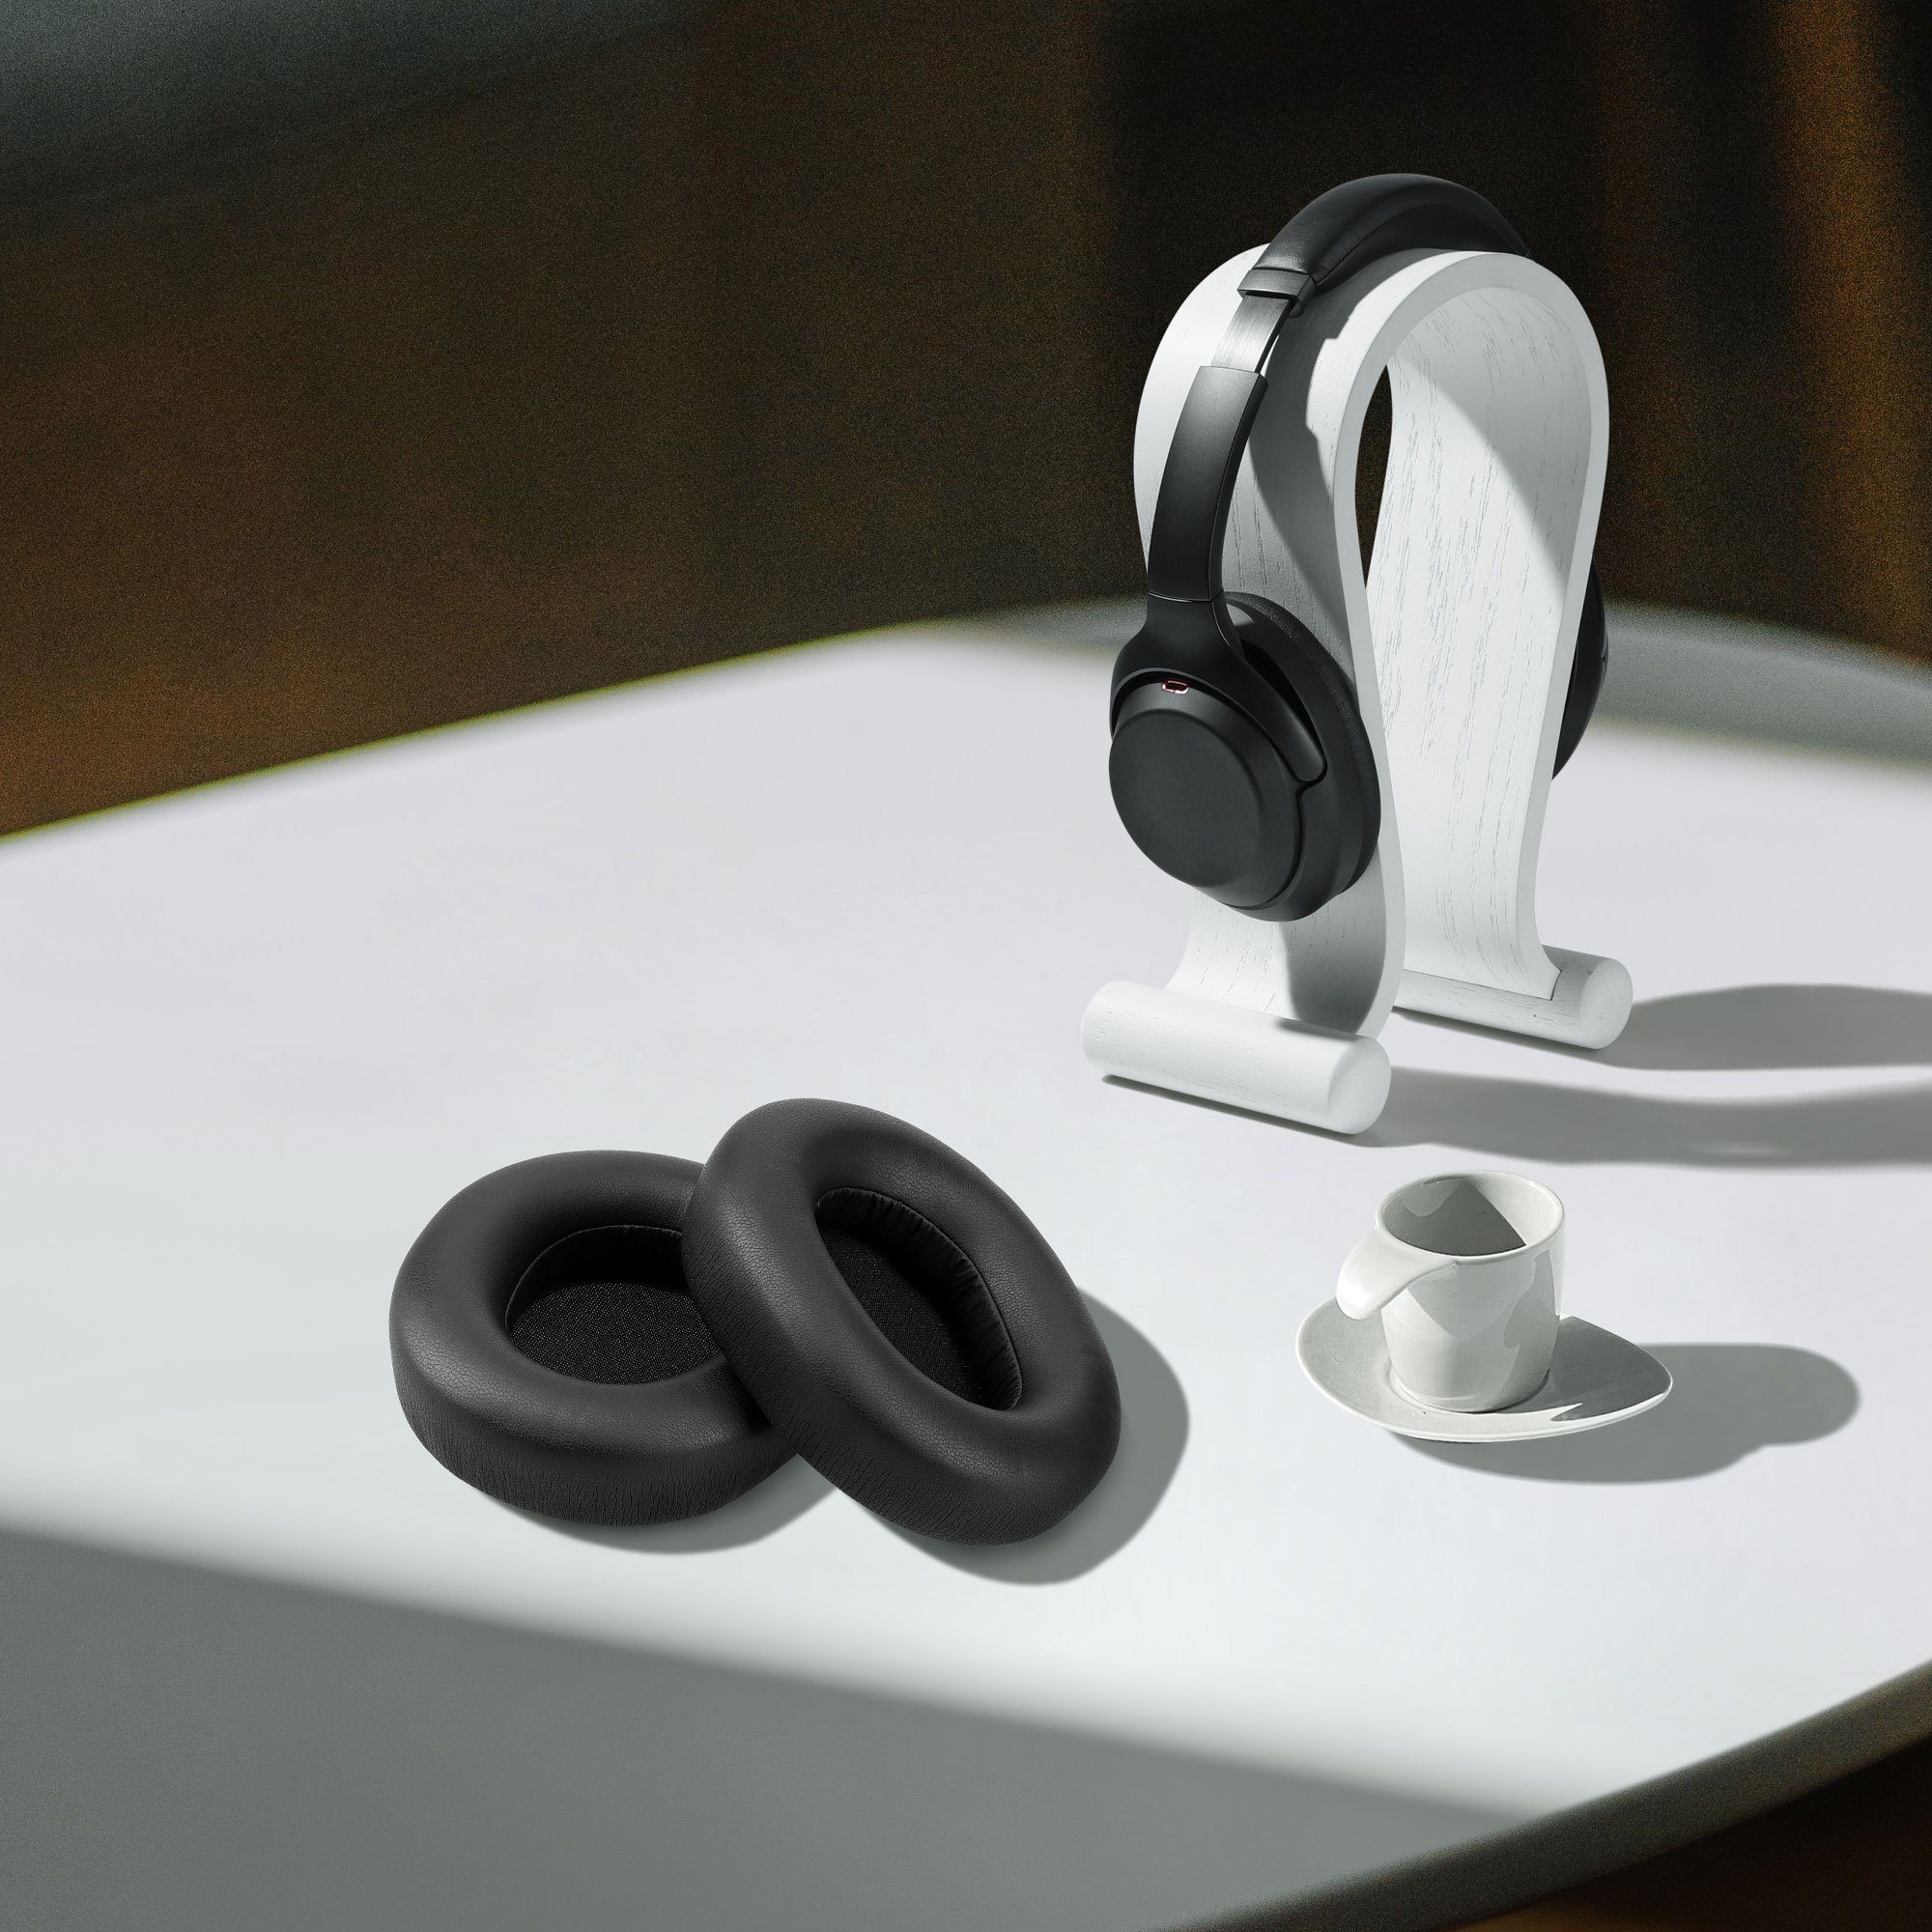 2x für kwmobile Ohr Kunstleder - Headphones) für SteelSeries Ohrpolster Pro Arctis Nova Ear Wireless Over (Ohrpolster Polster Kopfhörer Polster